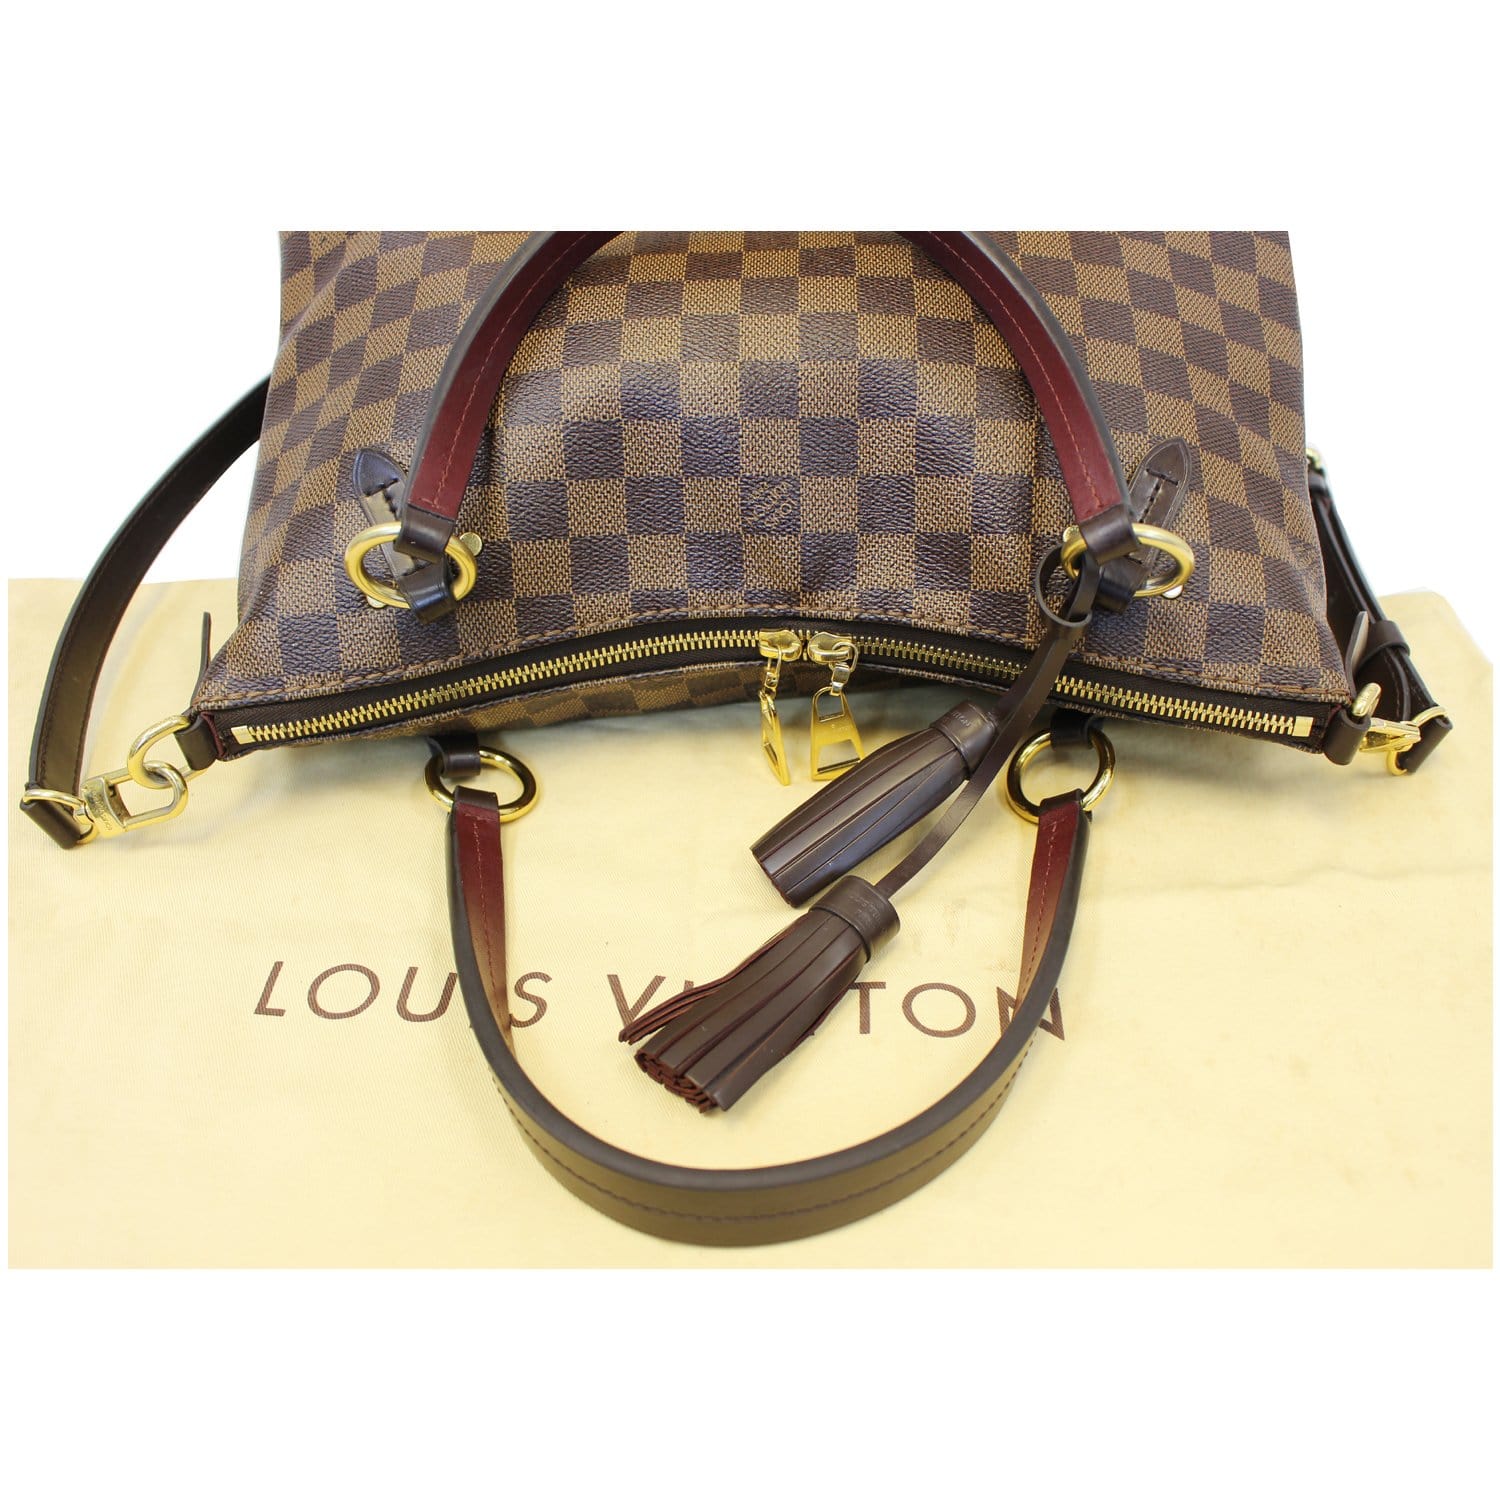 Louis Vuitton Lymington New $100